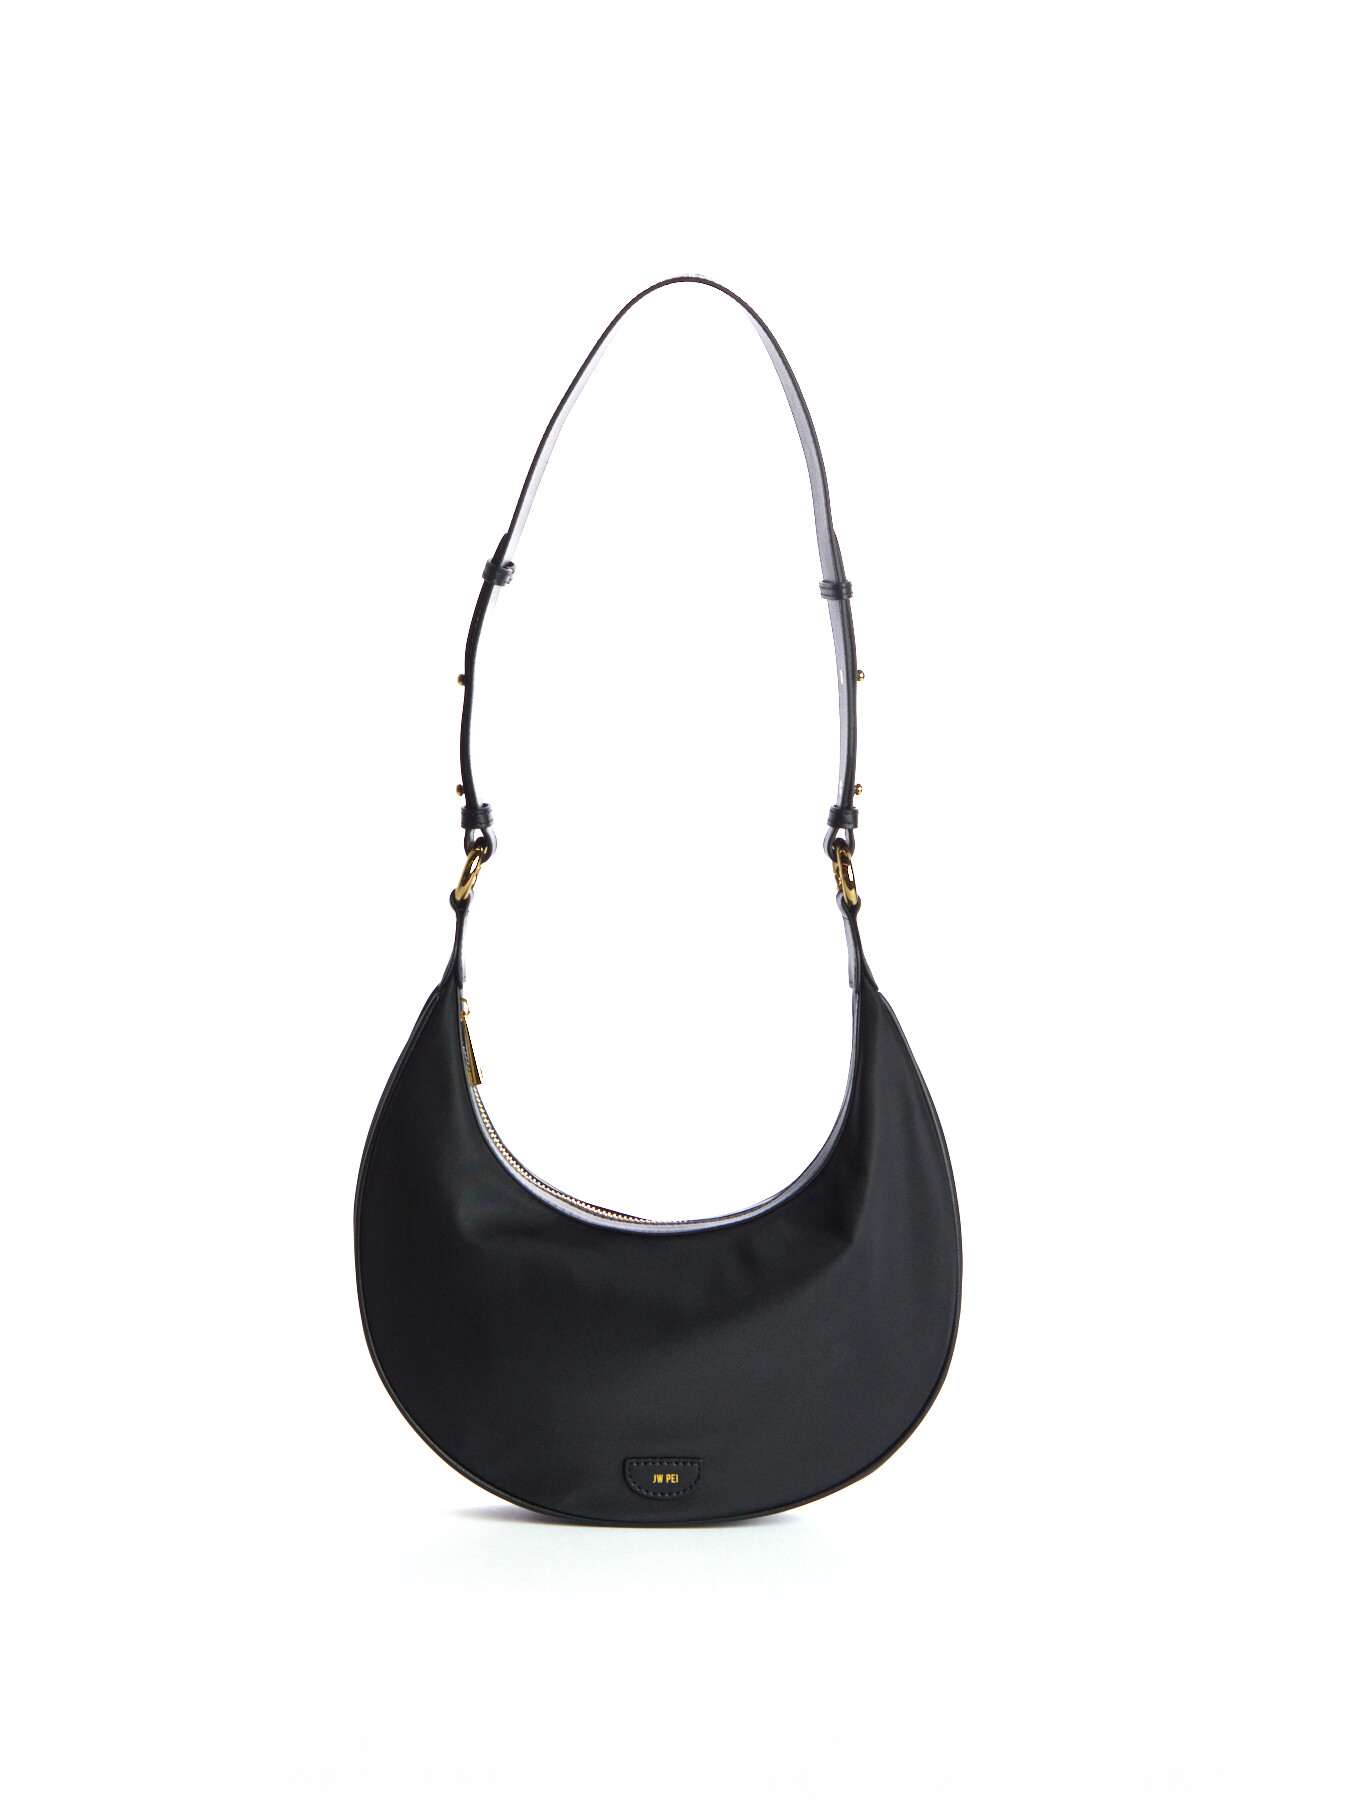 Jw Pei Women's Carly Nylon Saddle Bag Black